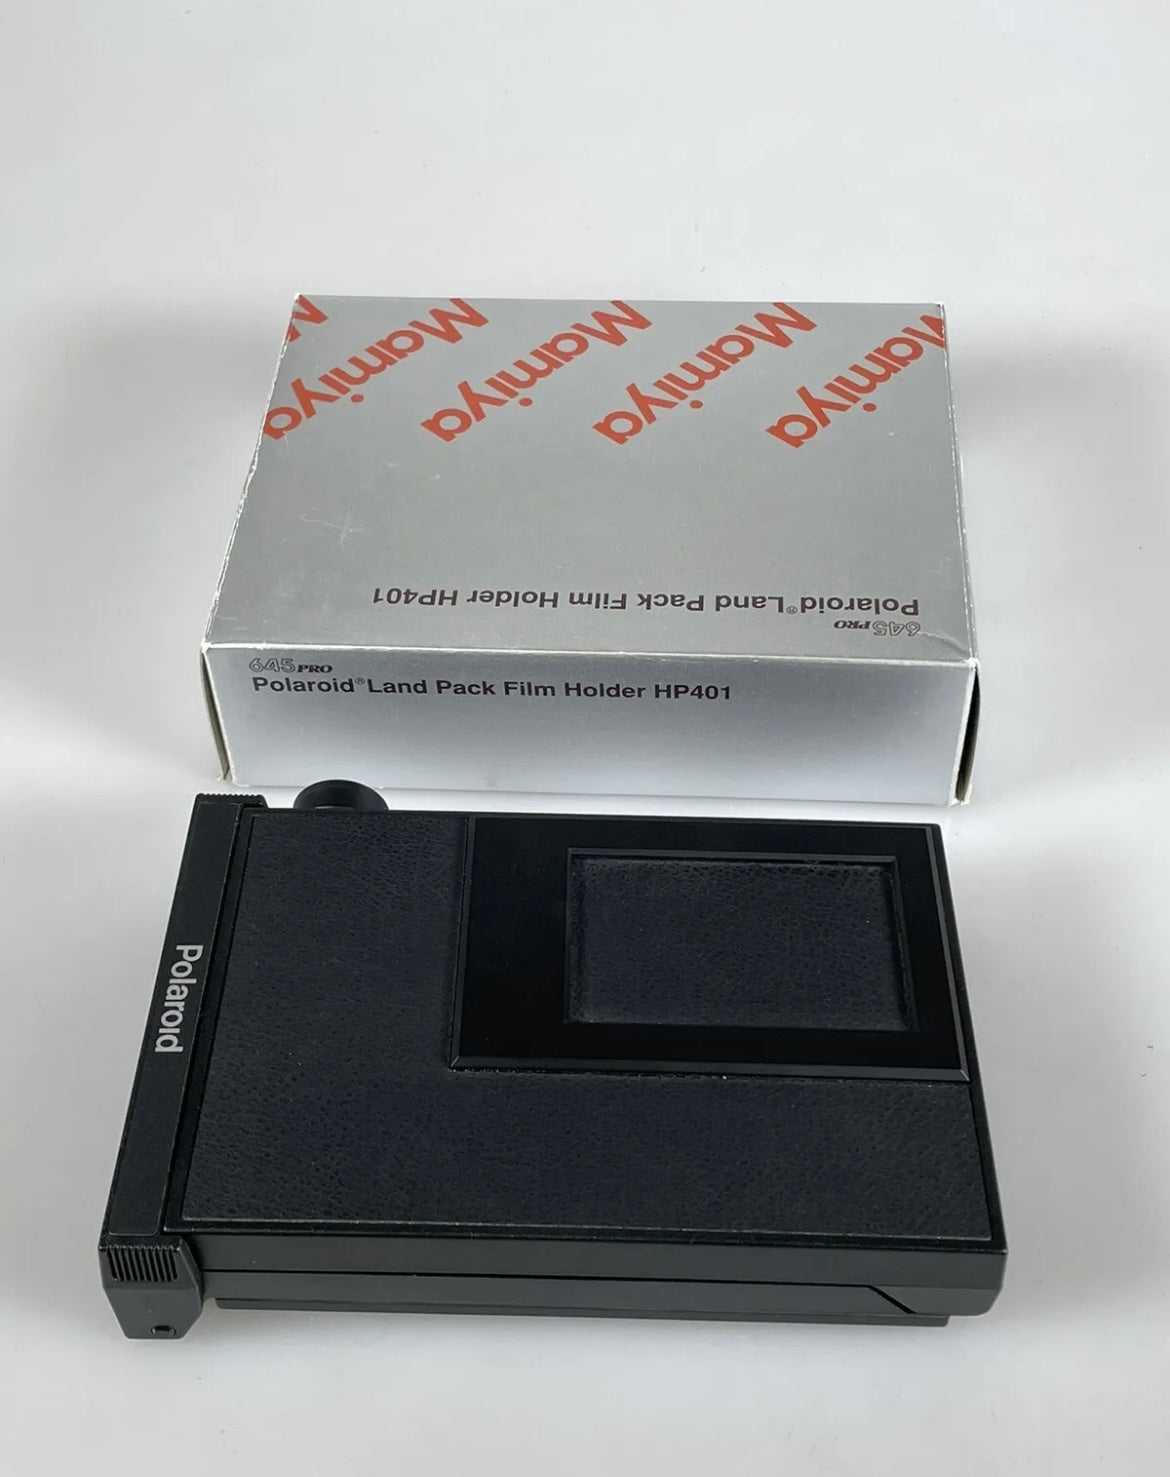 Mamiya 645 PRO Polaroid Back Land Pack Film Holder HP401 w/Box